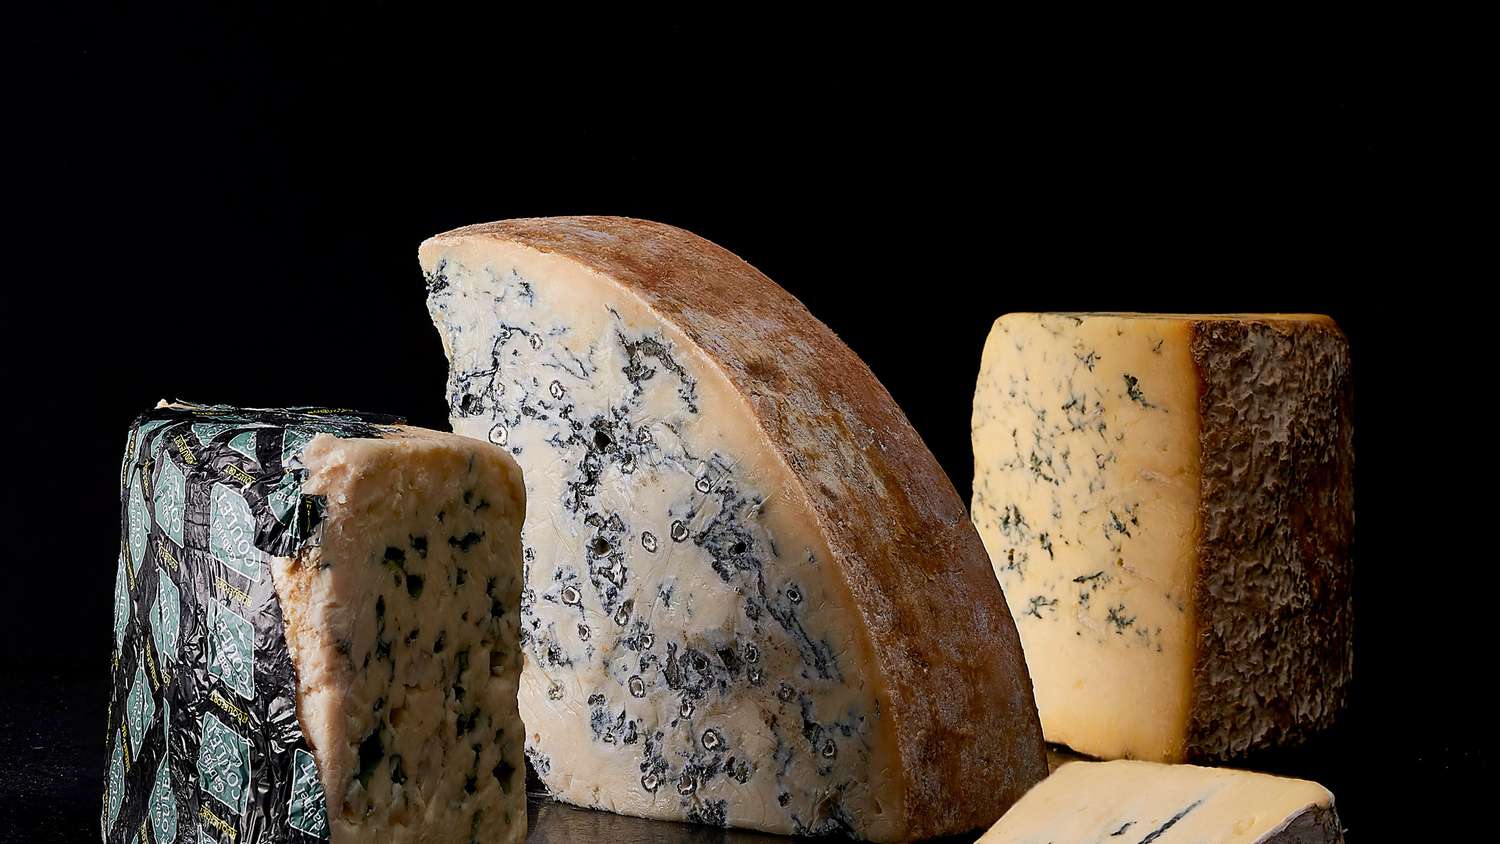 blocks of blue cheese